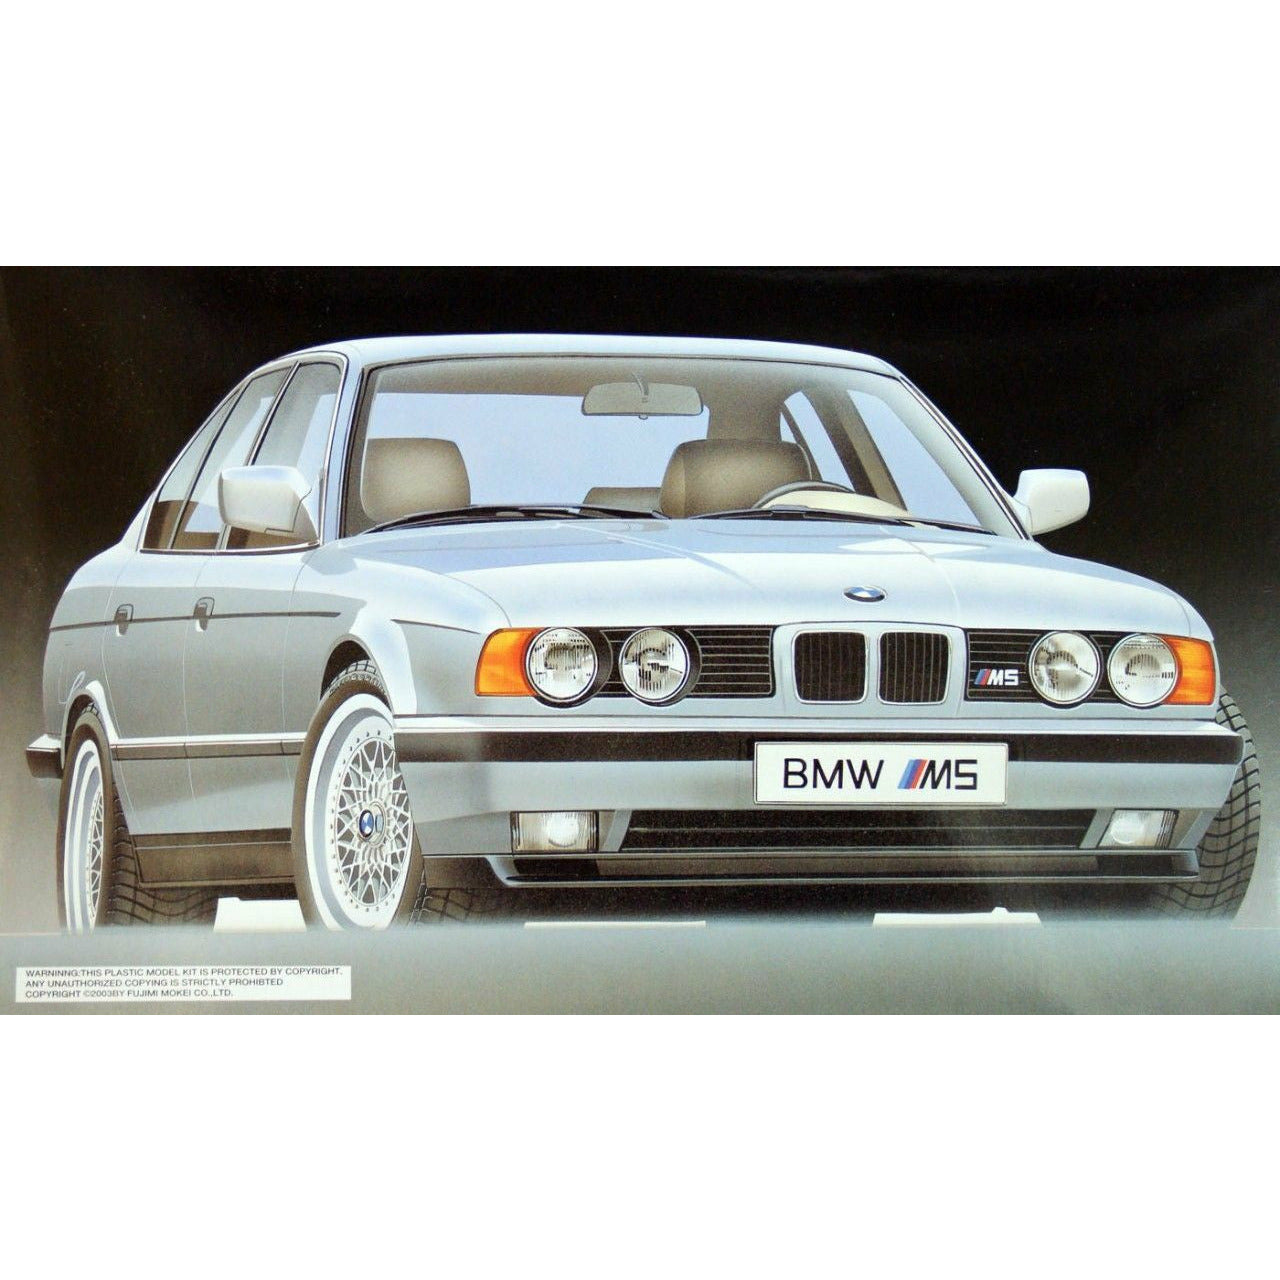 BMW M5 1/24 Model Car Kit #126739 by Fujimi